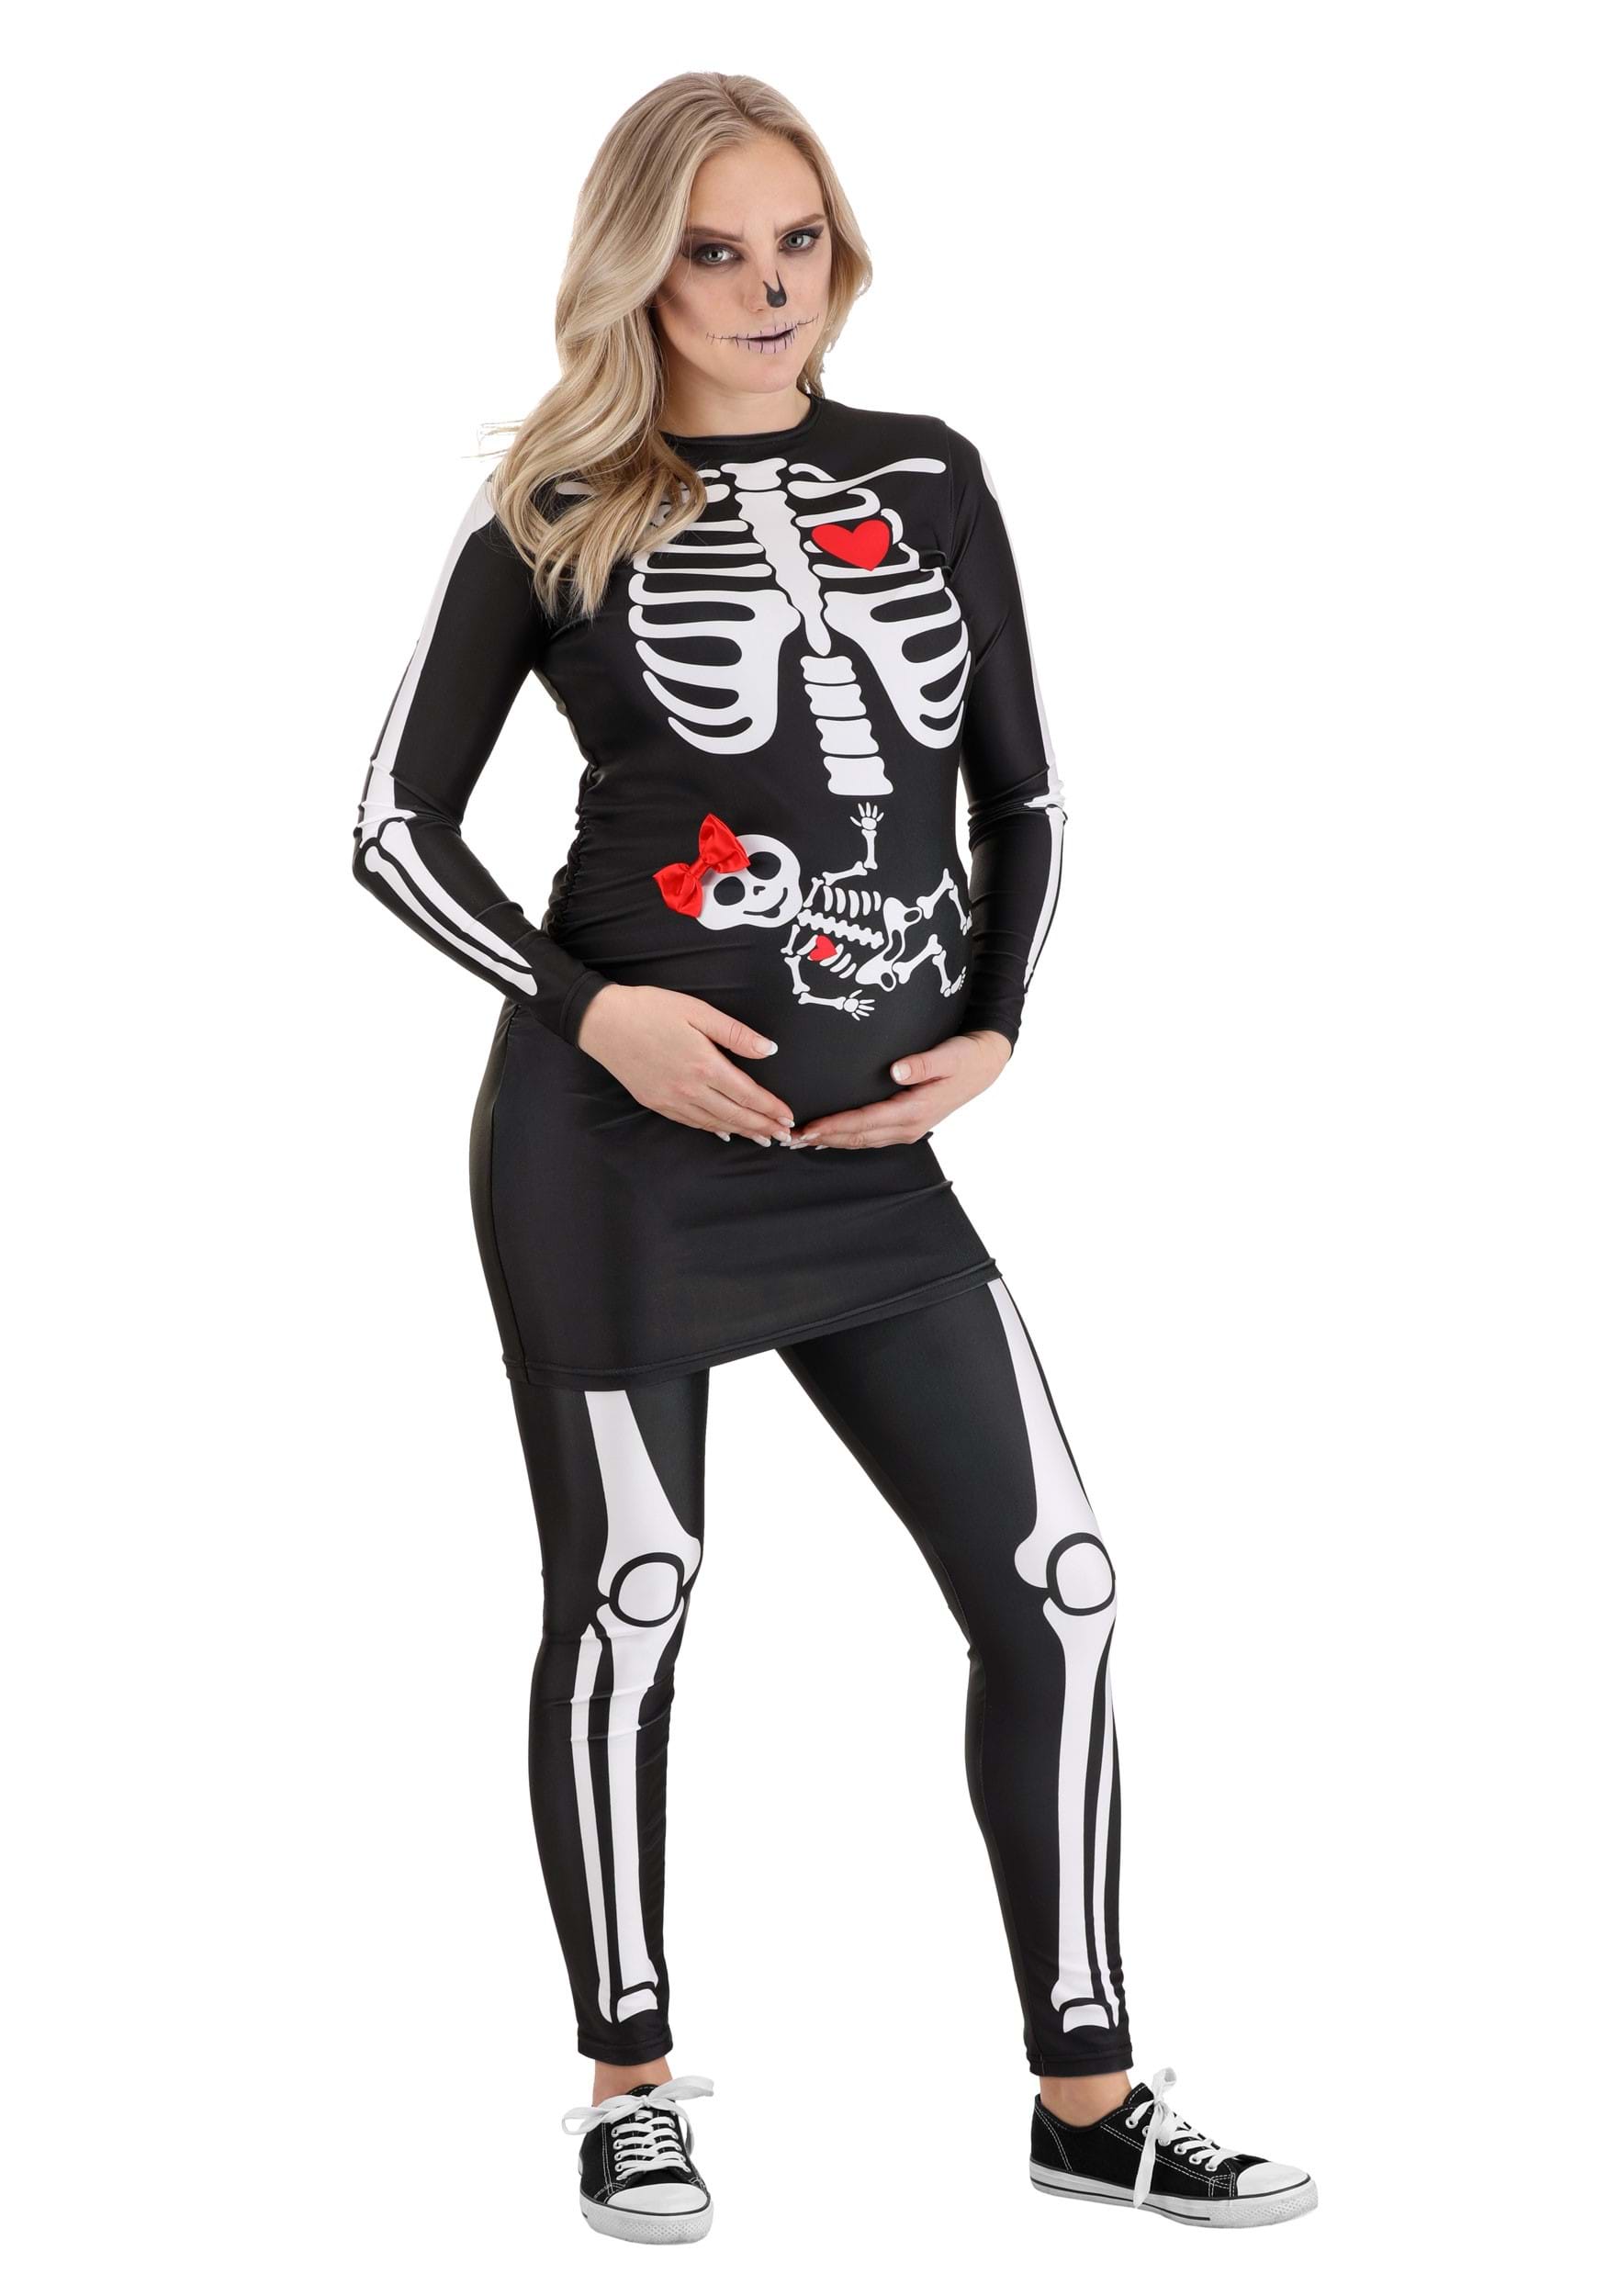 https://images.halloweencostumes.ca/products/51087/1-1/womens-maternity-skeleton-costume.jpg